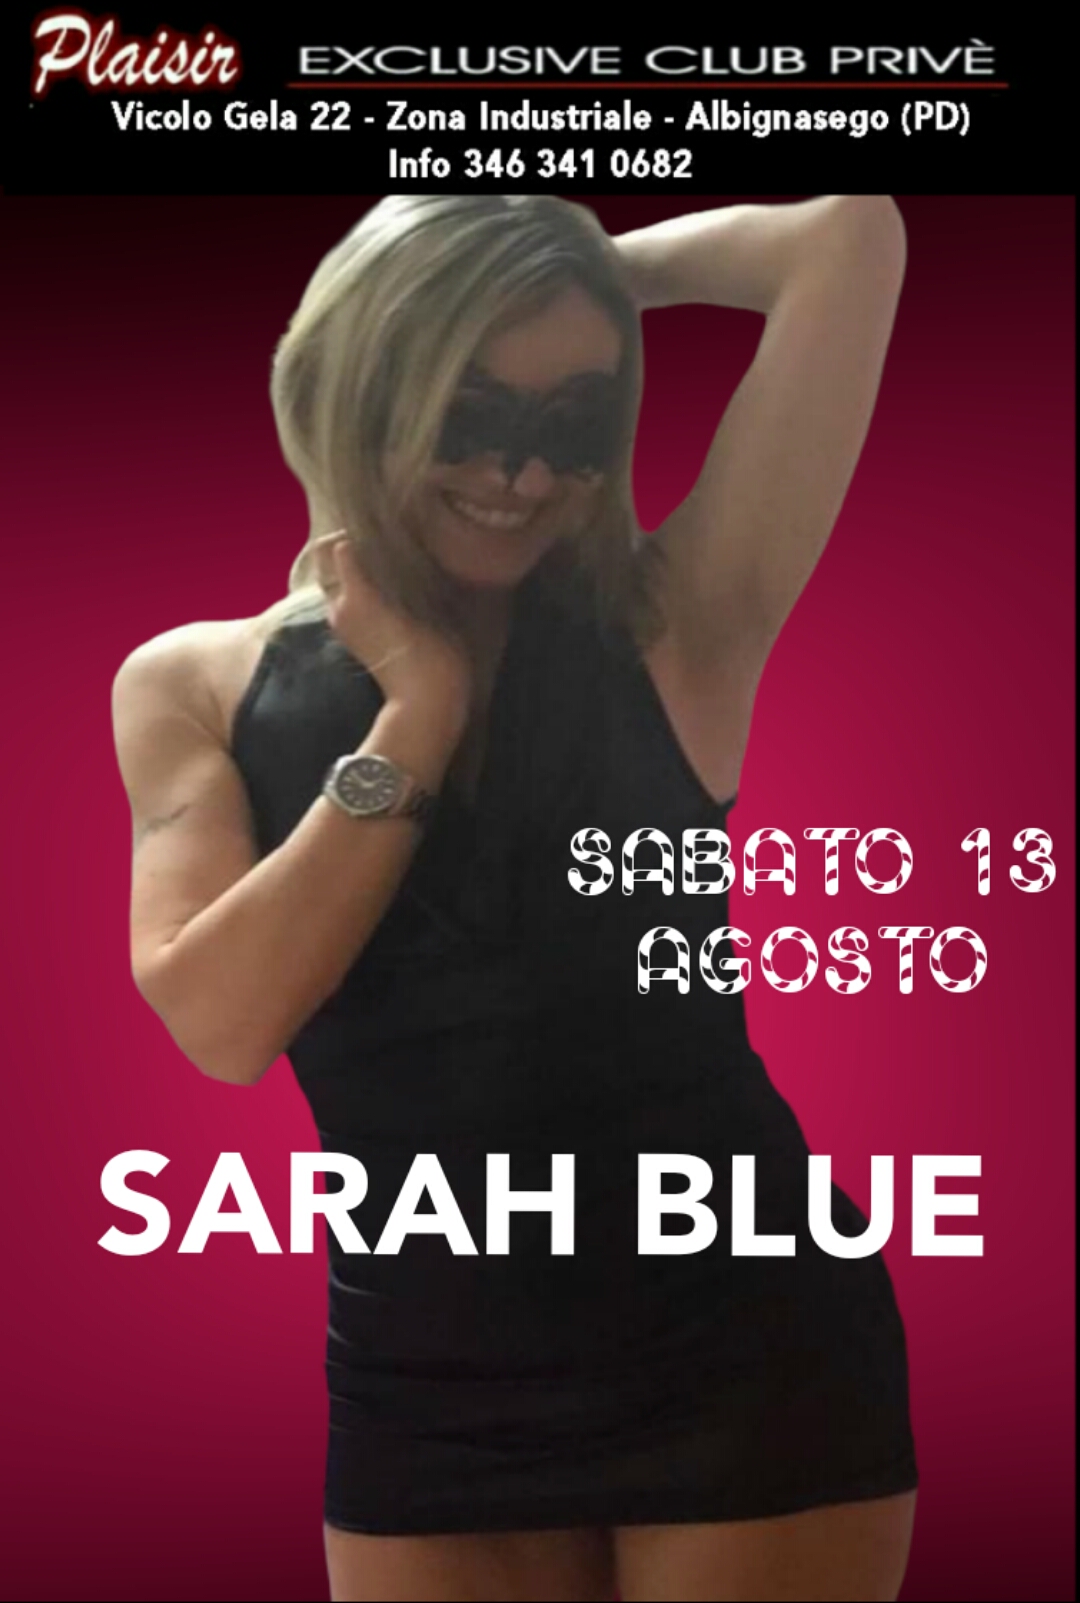 OSPITE DELLA SERATA SARAH BLUE 